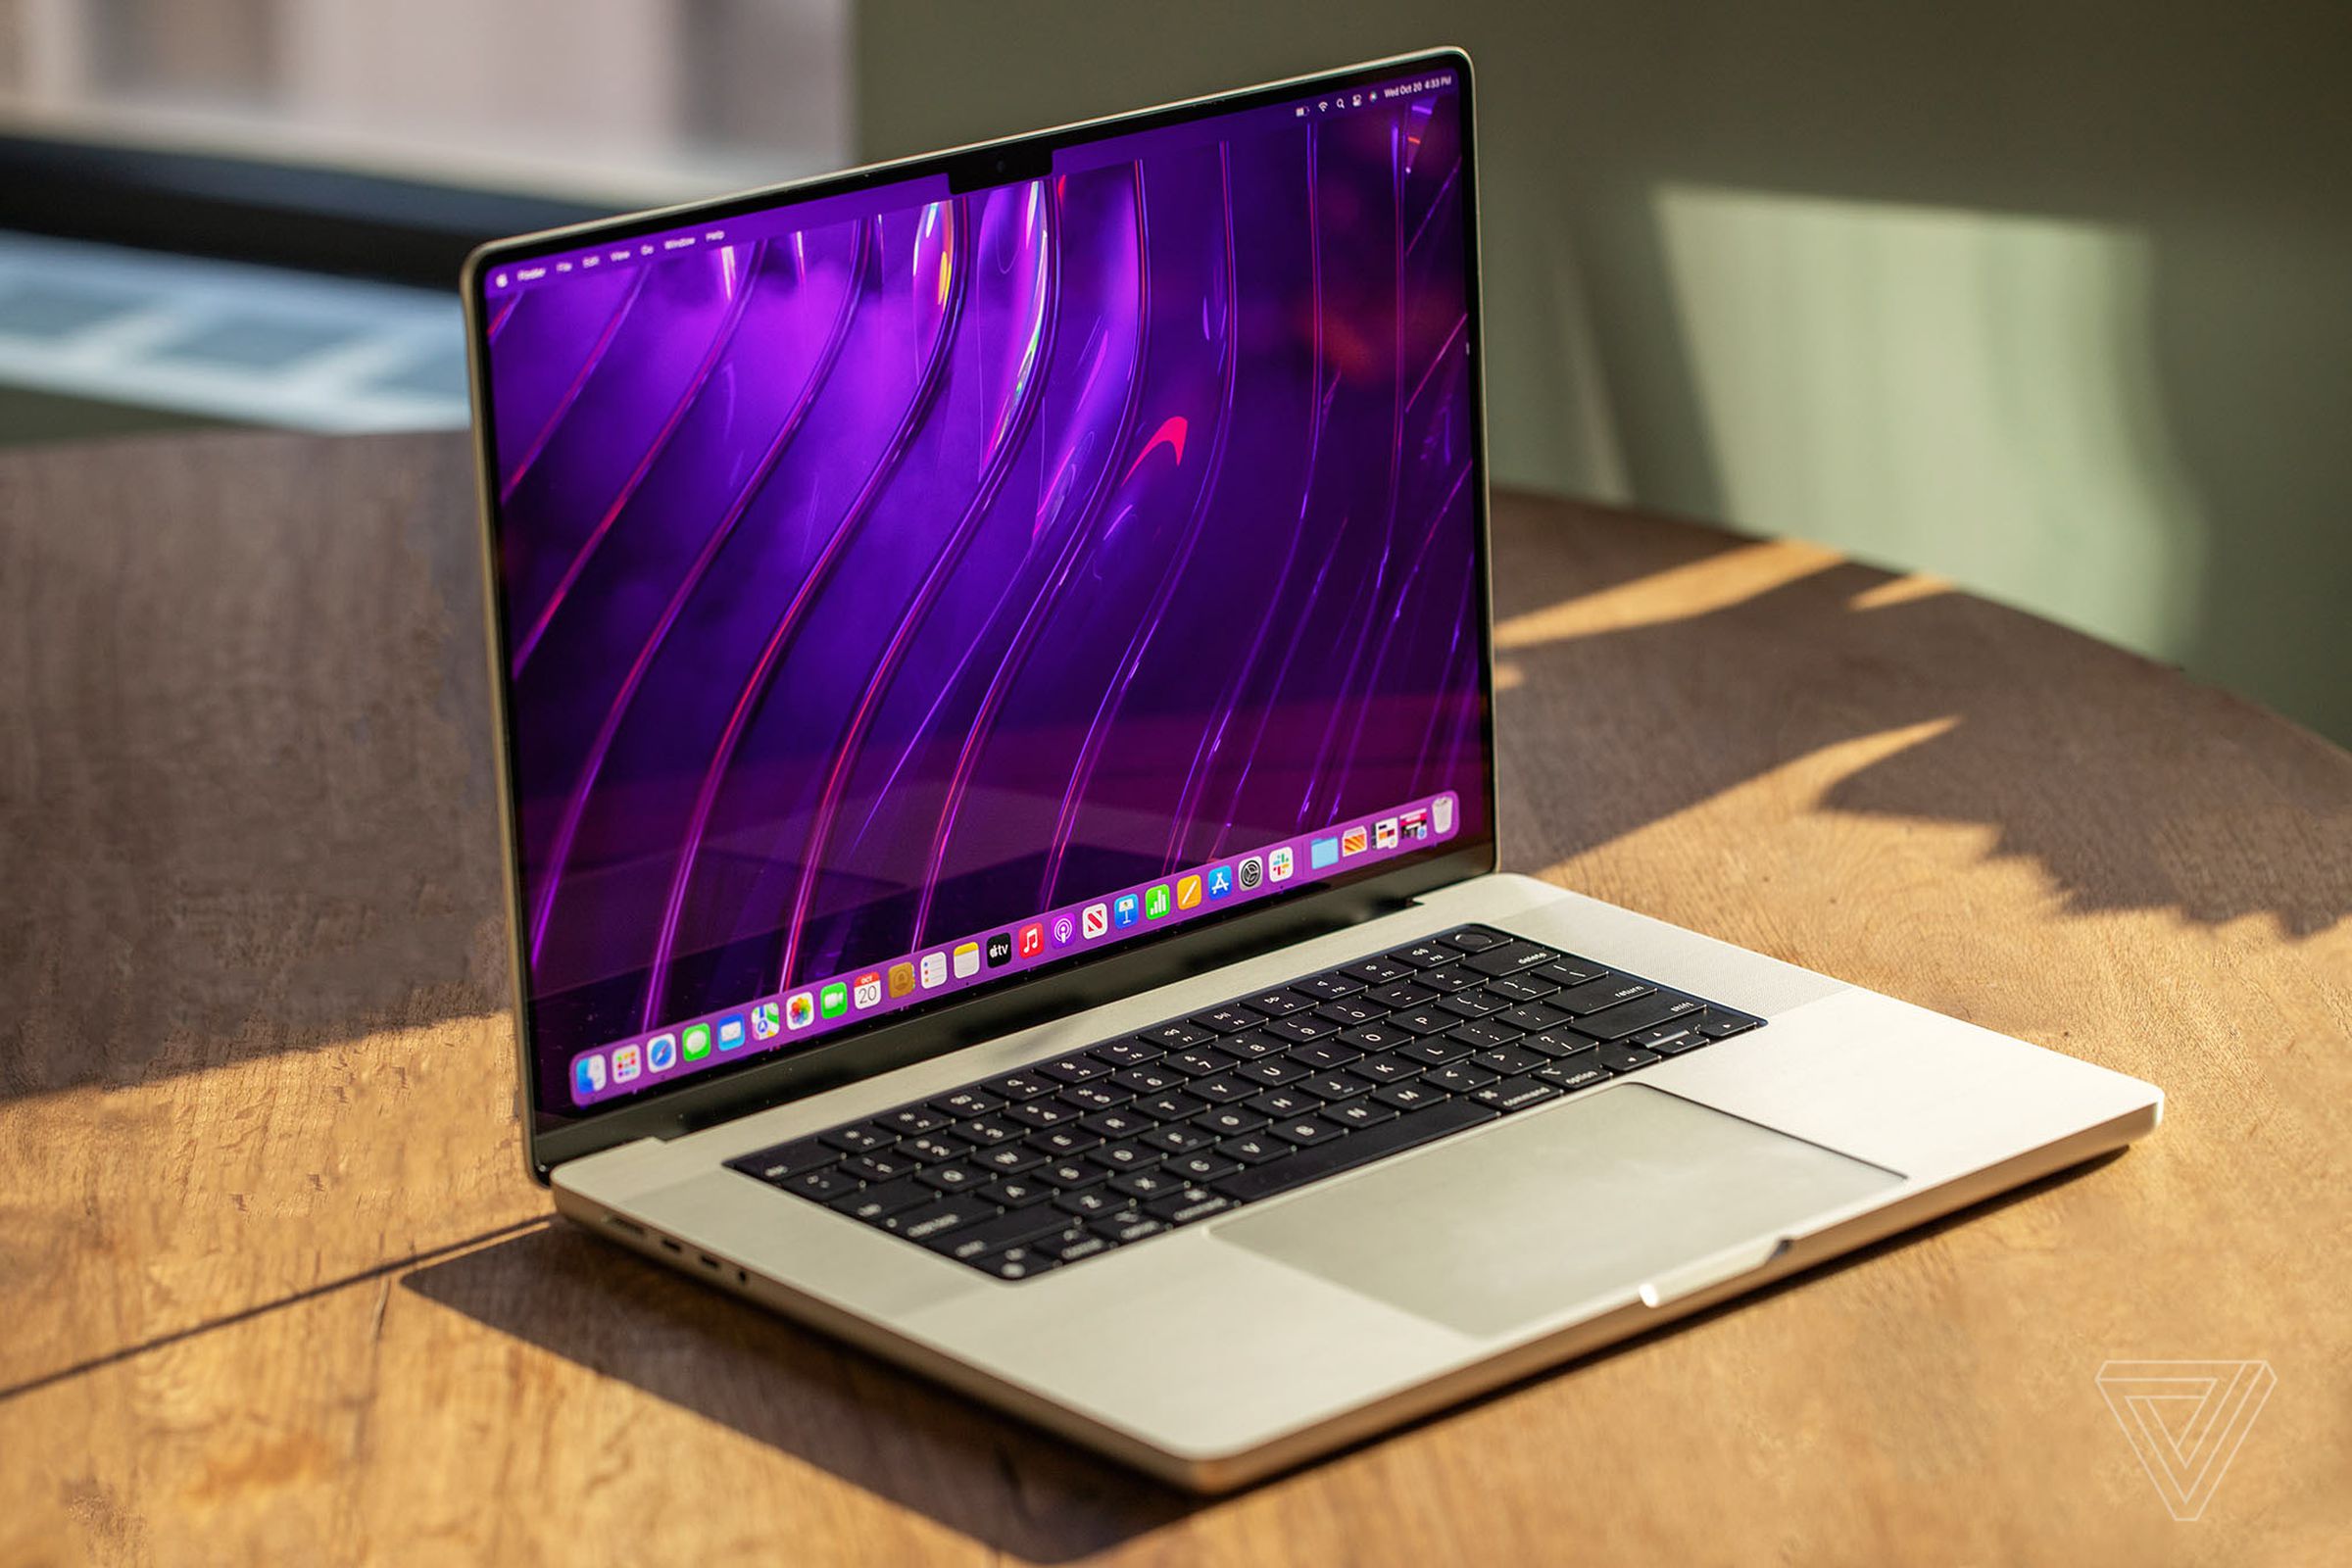 Apple’s new MacBook Pros include some impressive GPU performance.